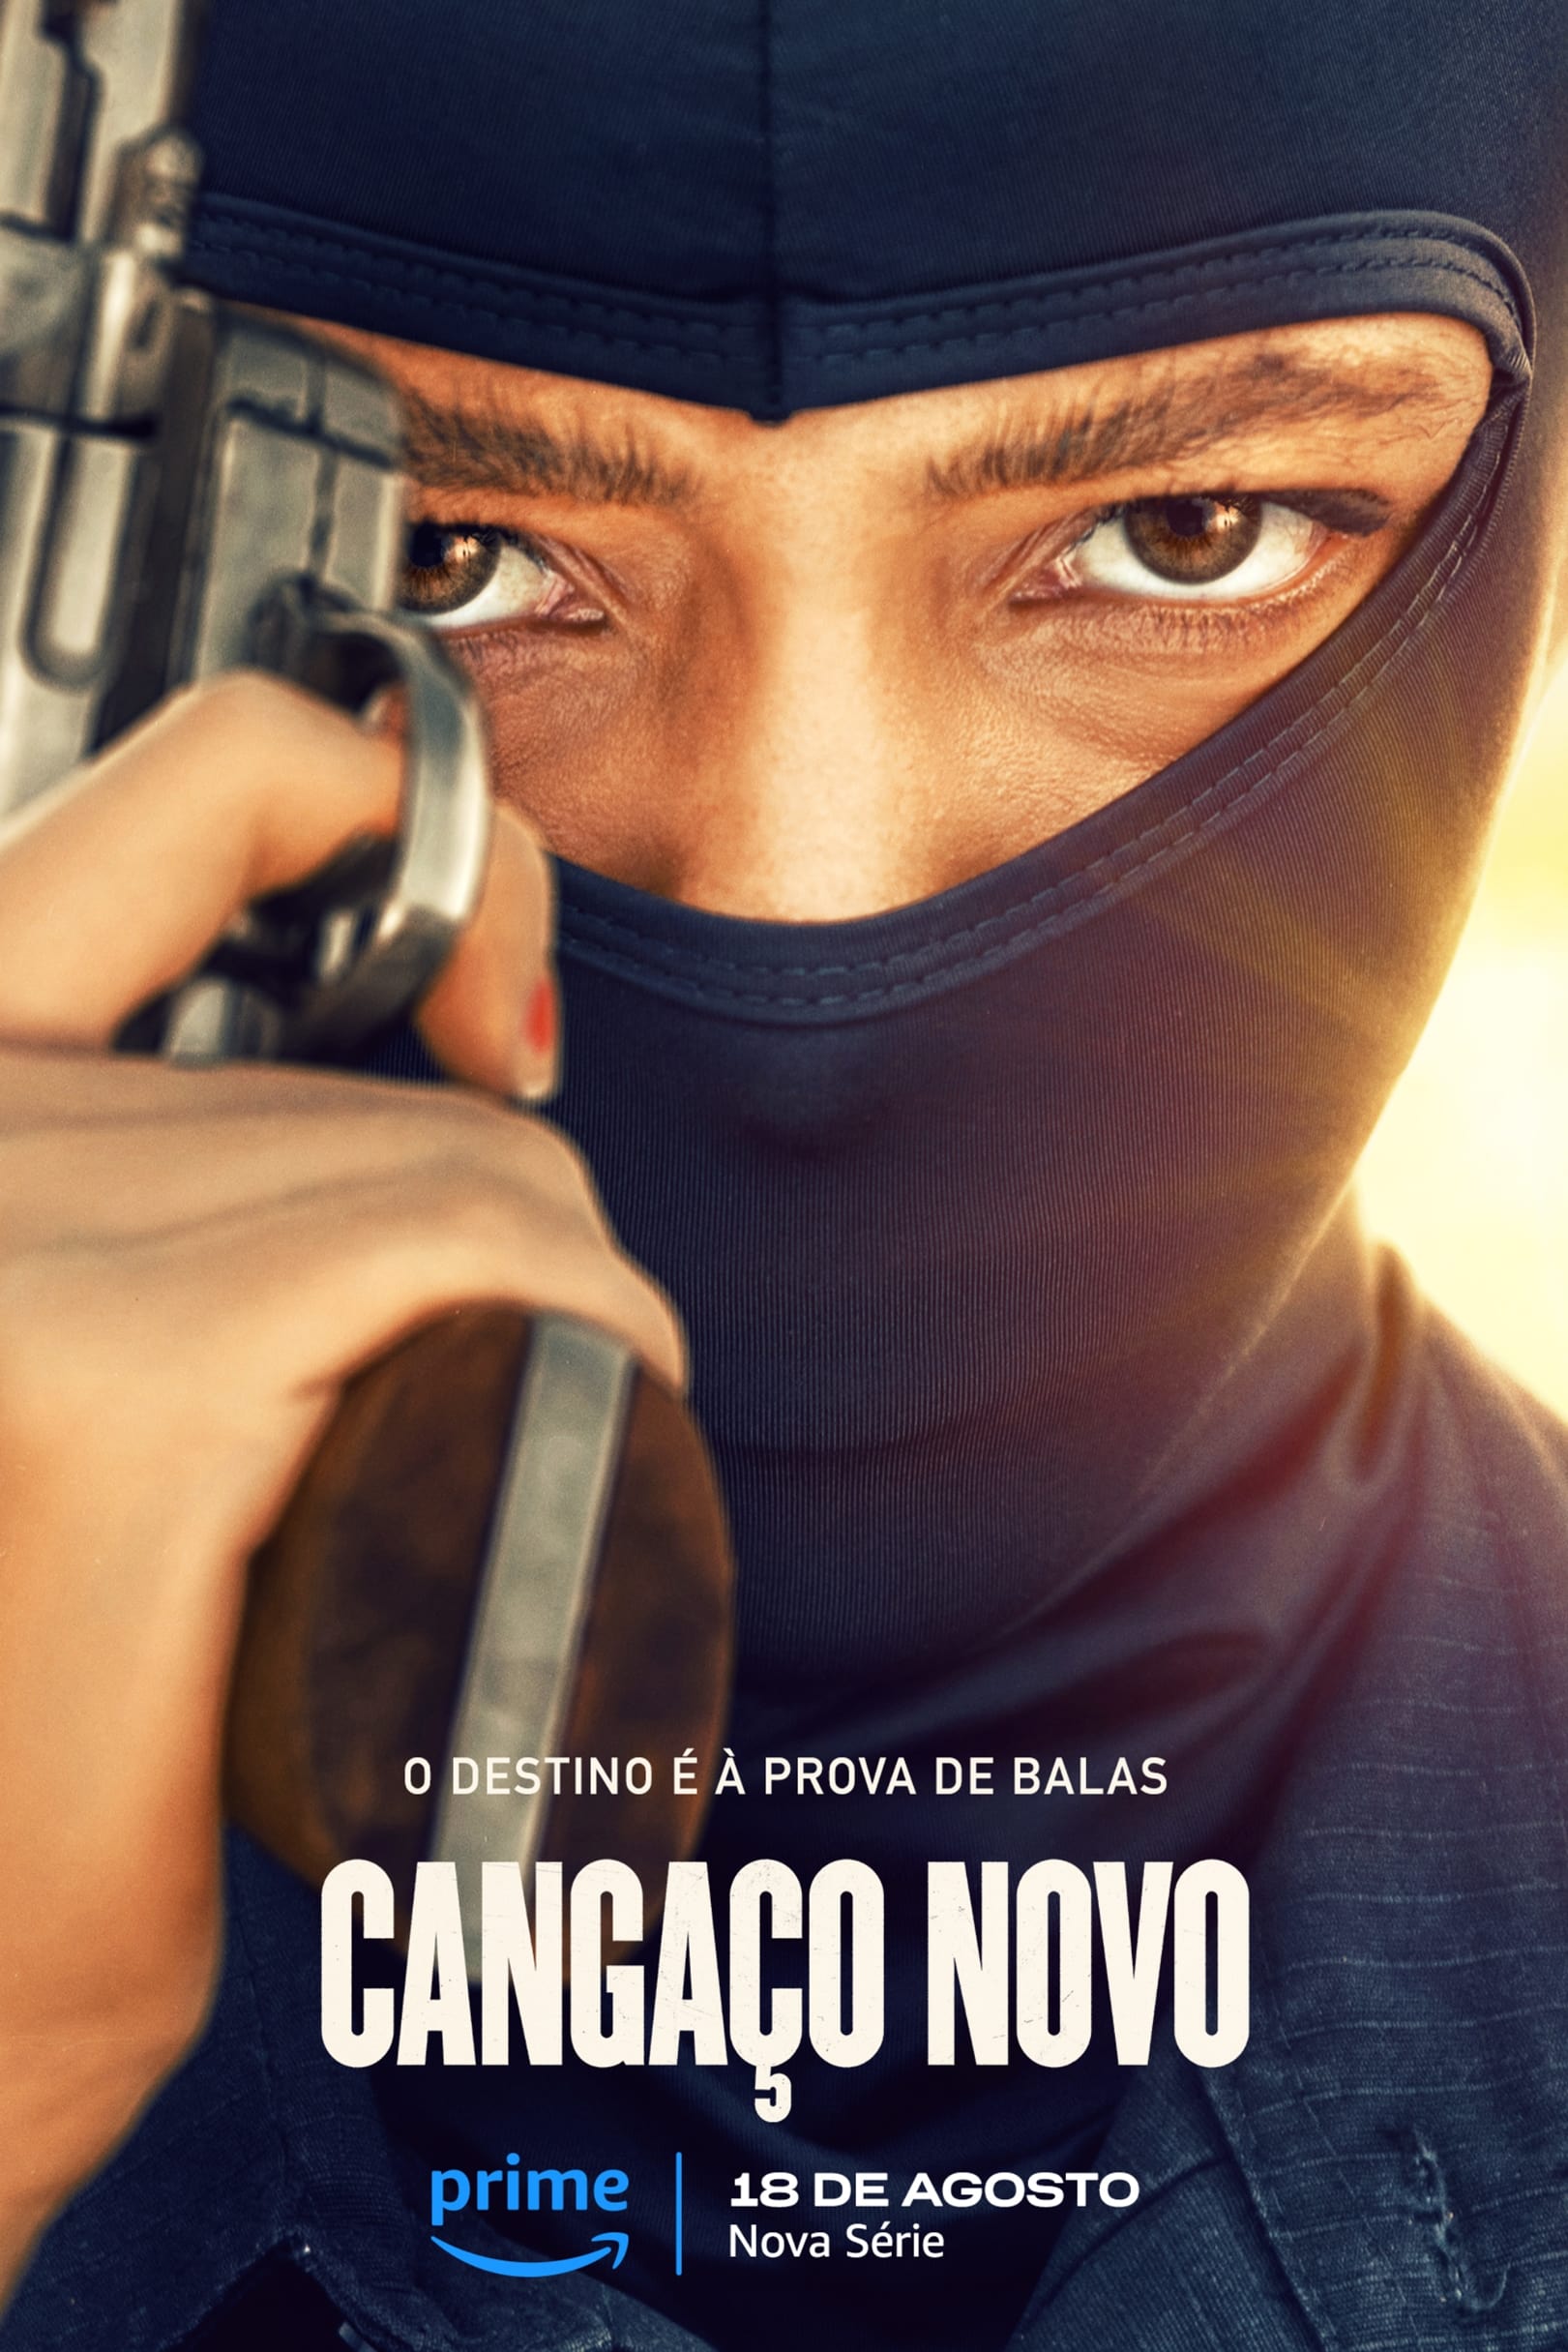 TV ratings for New Bandits (Cangaço Novo) in Suecia. Amazon Prime Video TV series